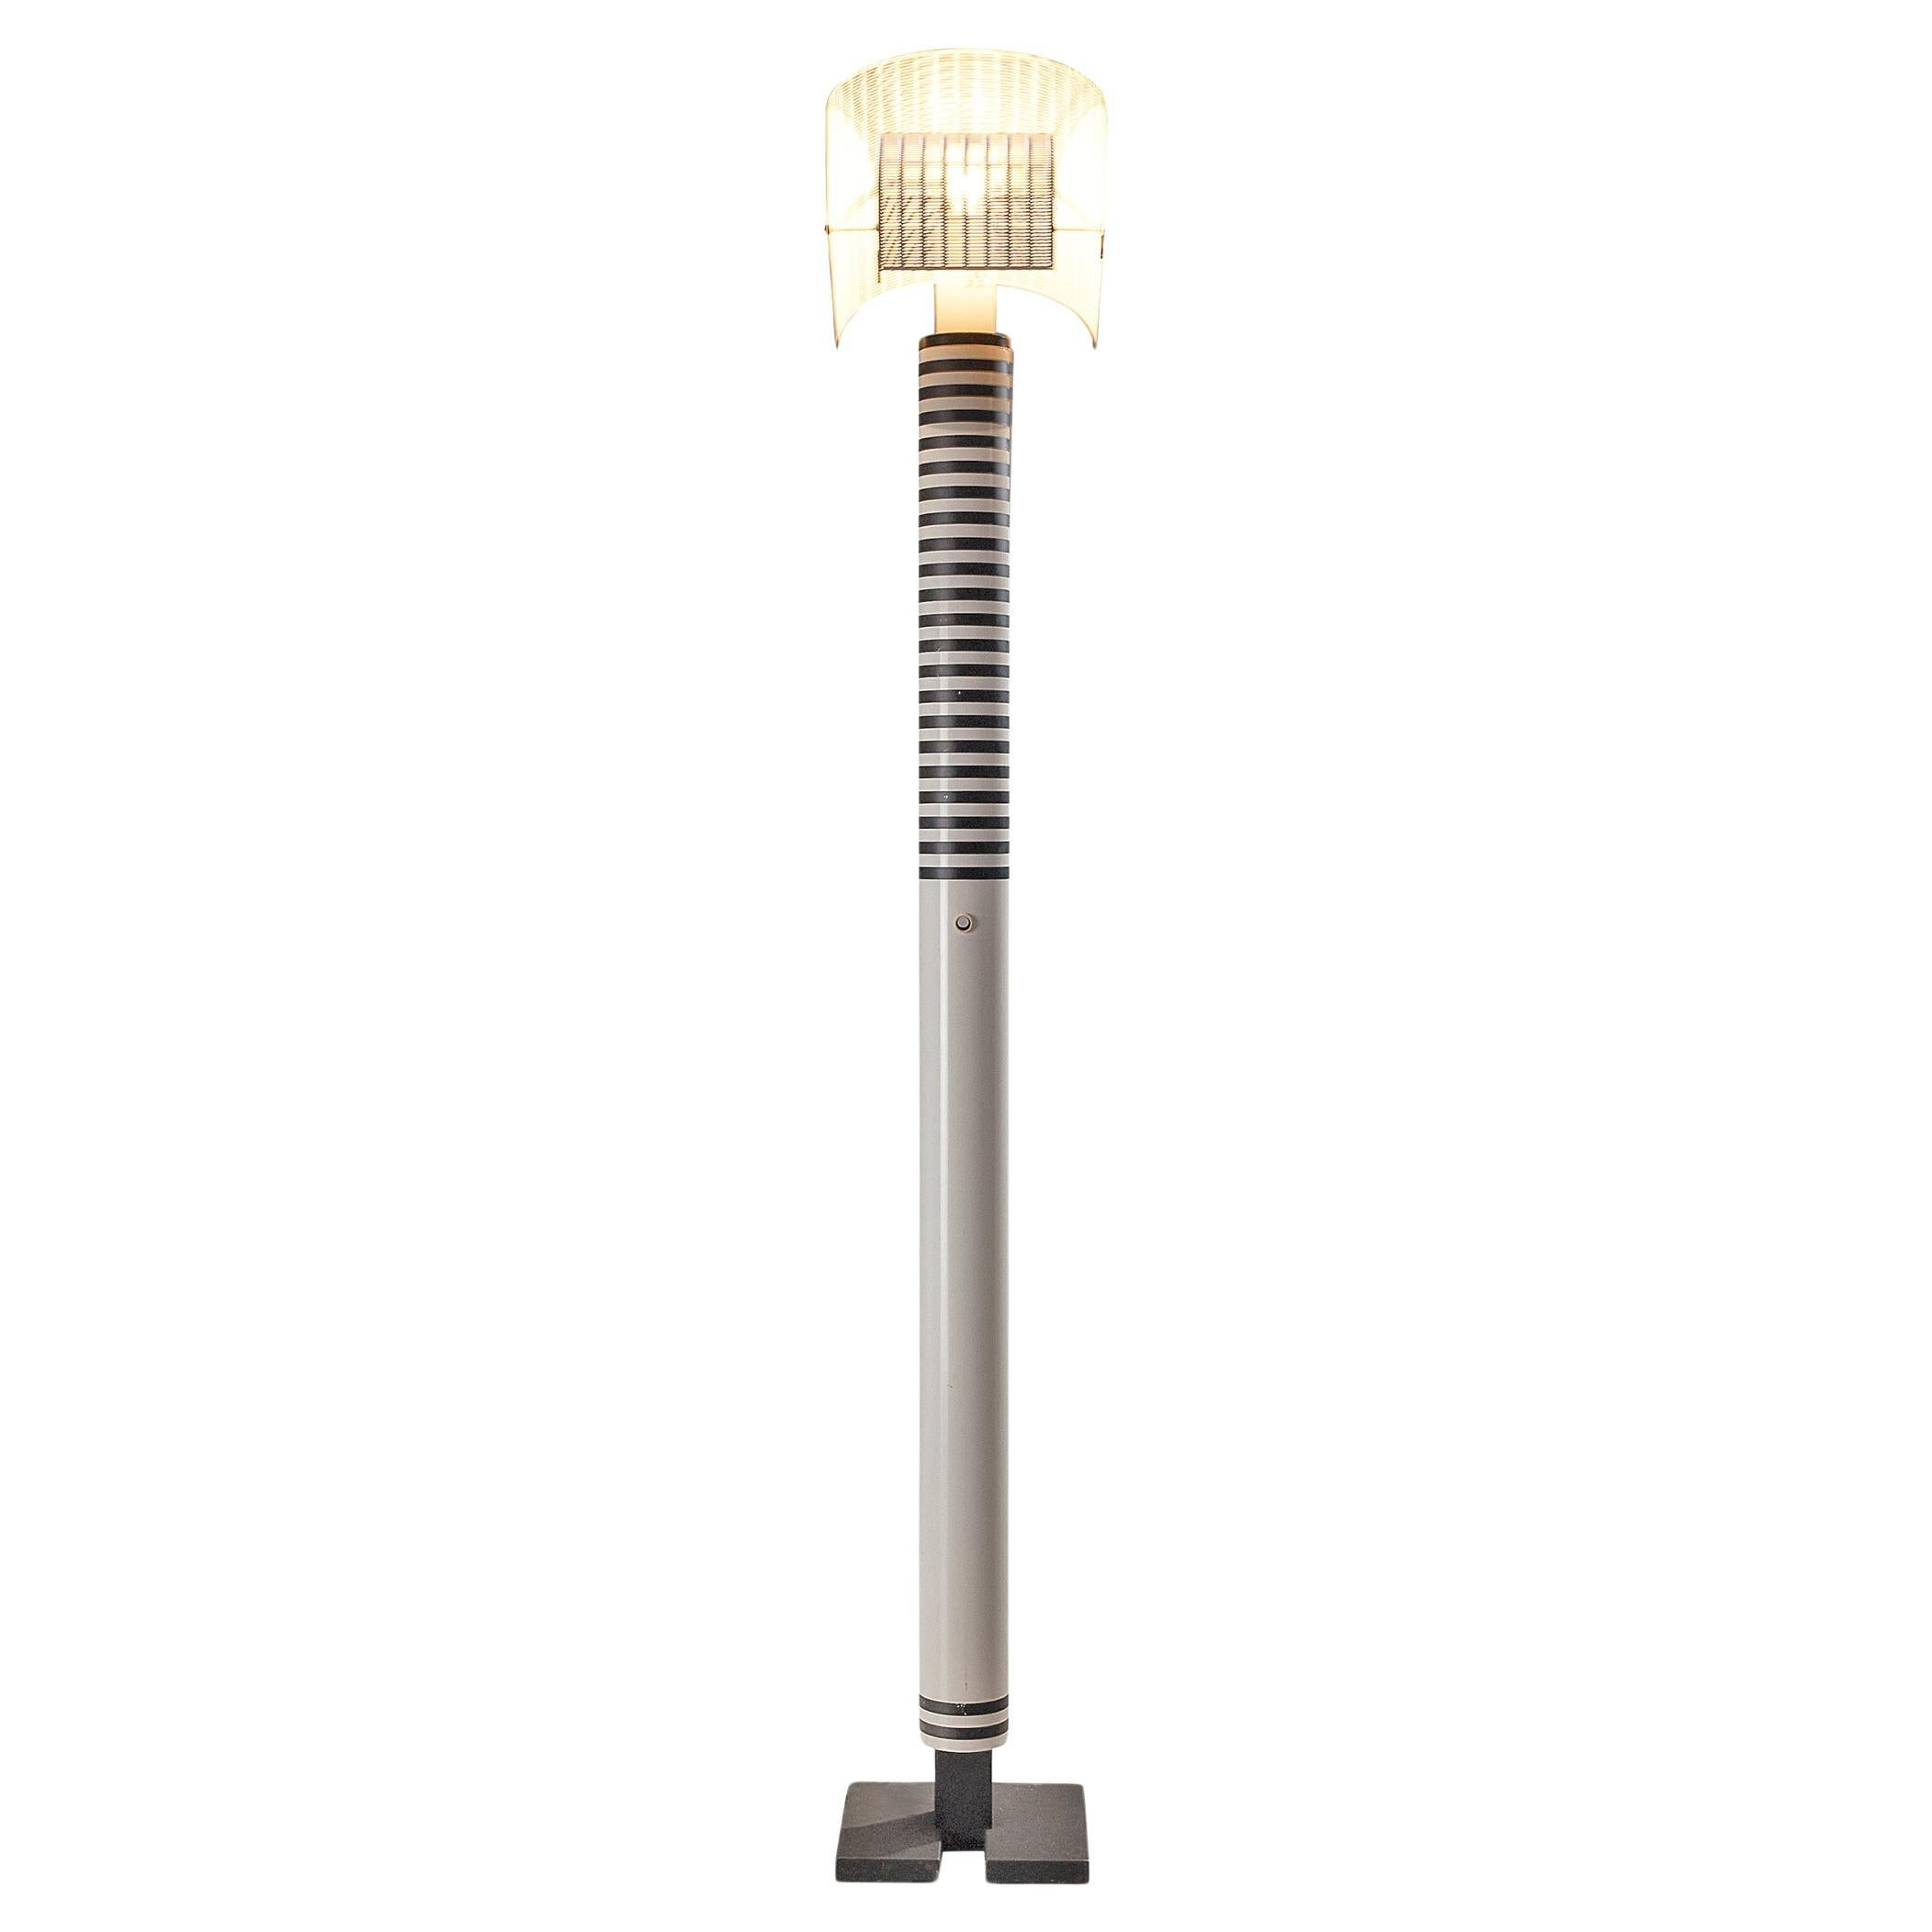 Mario Botta for Artemide ‘Shogun’ Floor Lamp  For Sale